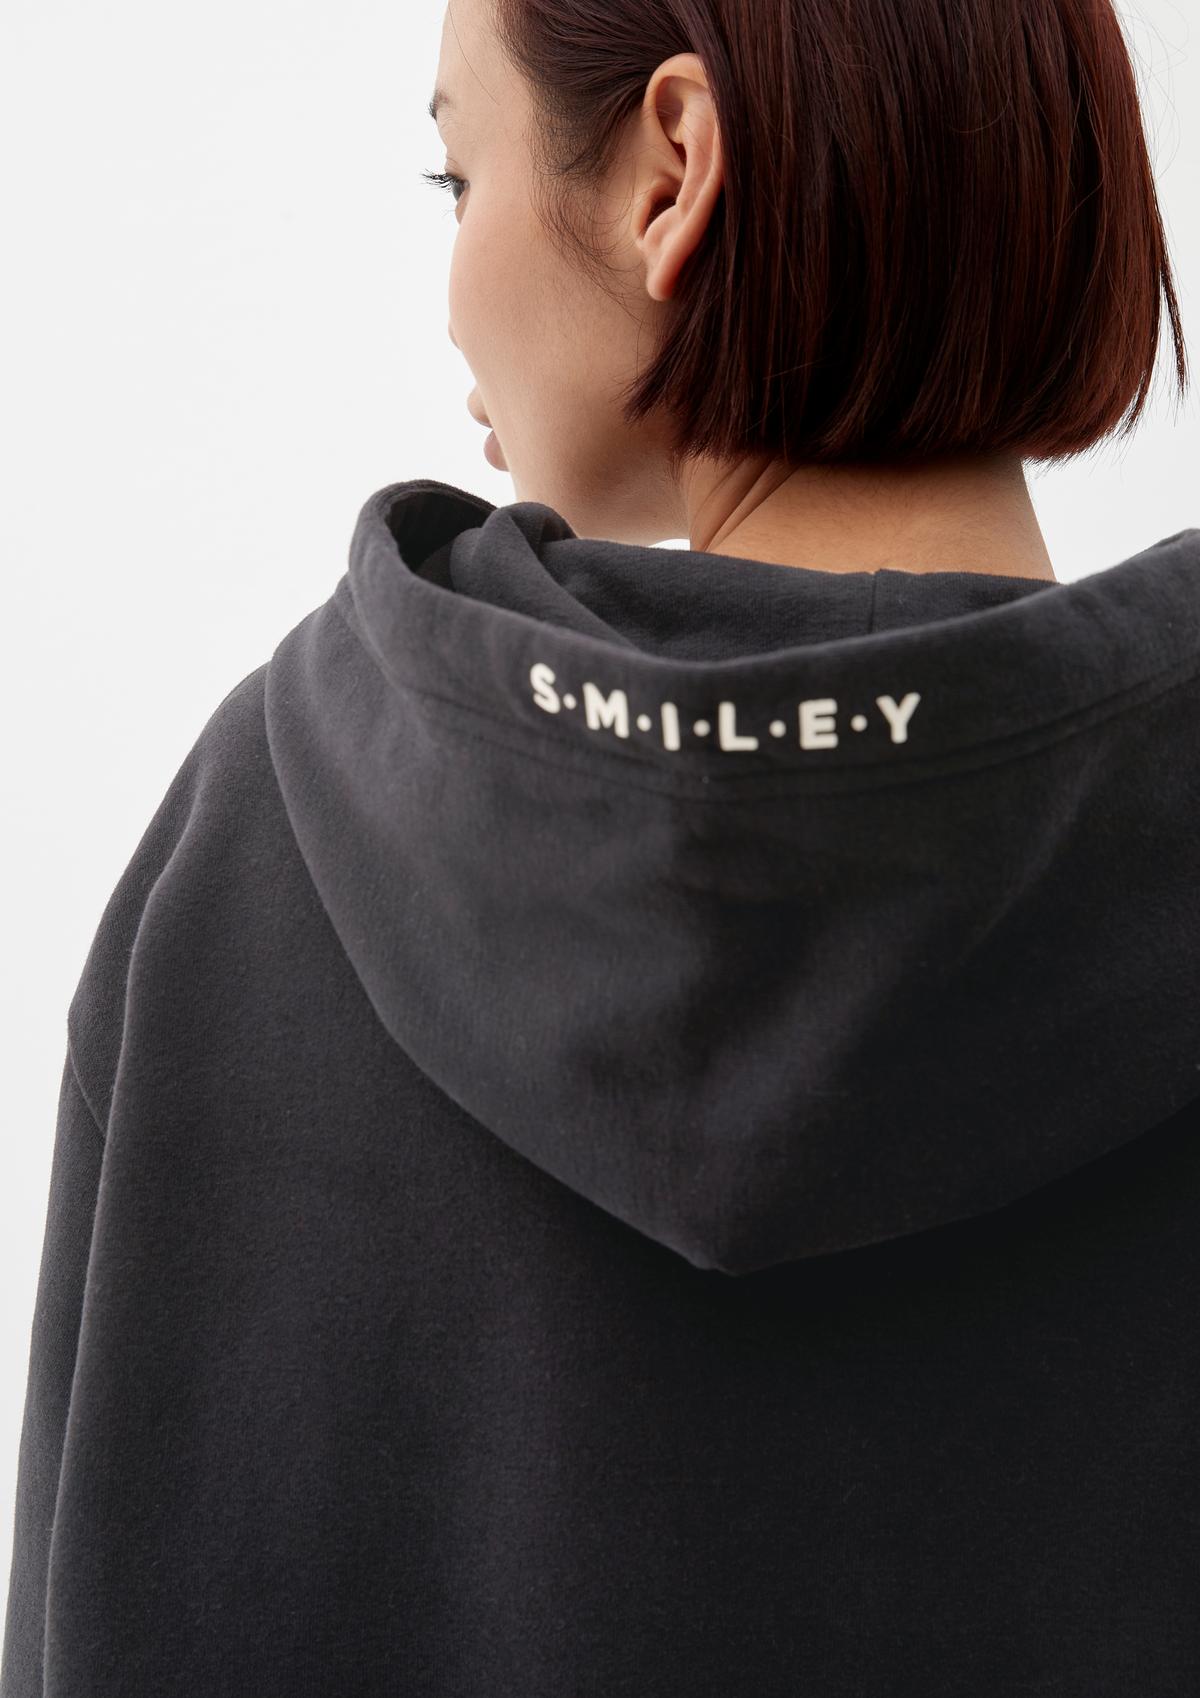 Langer olivgrün mit Smiley®-Print - Sweater